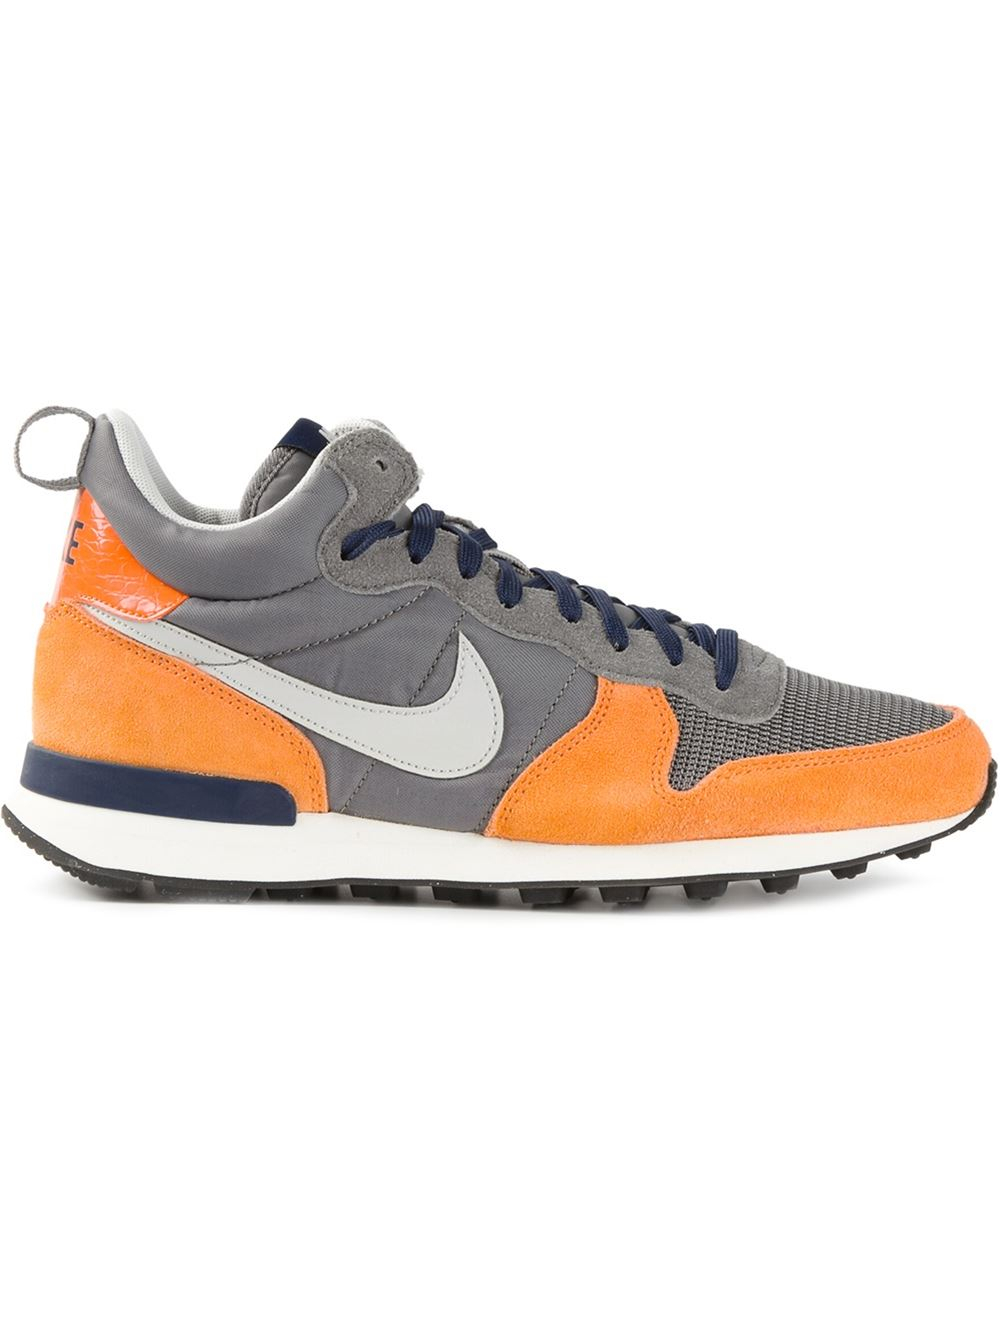 Nike 'Internationalist Mid' Sneakers in Grey (Orange) for Men - Lyst